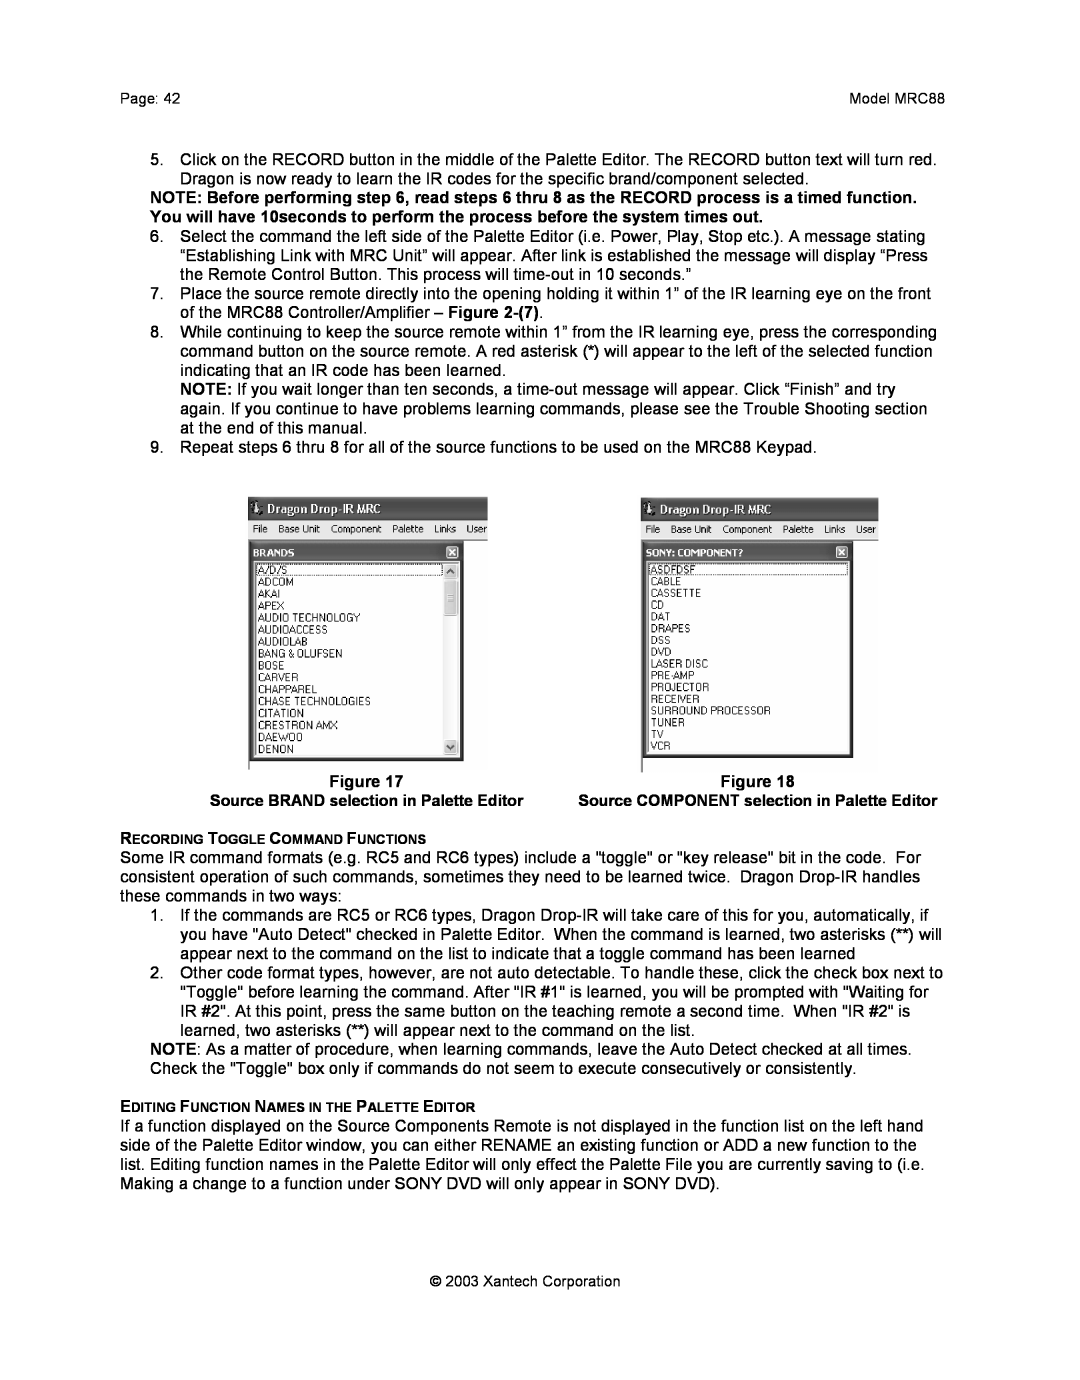 Xantech mrc88 Source BRAND selection in Palette Editor, Source COMPONENT selection in Palette Editor 